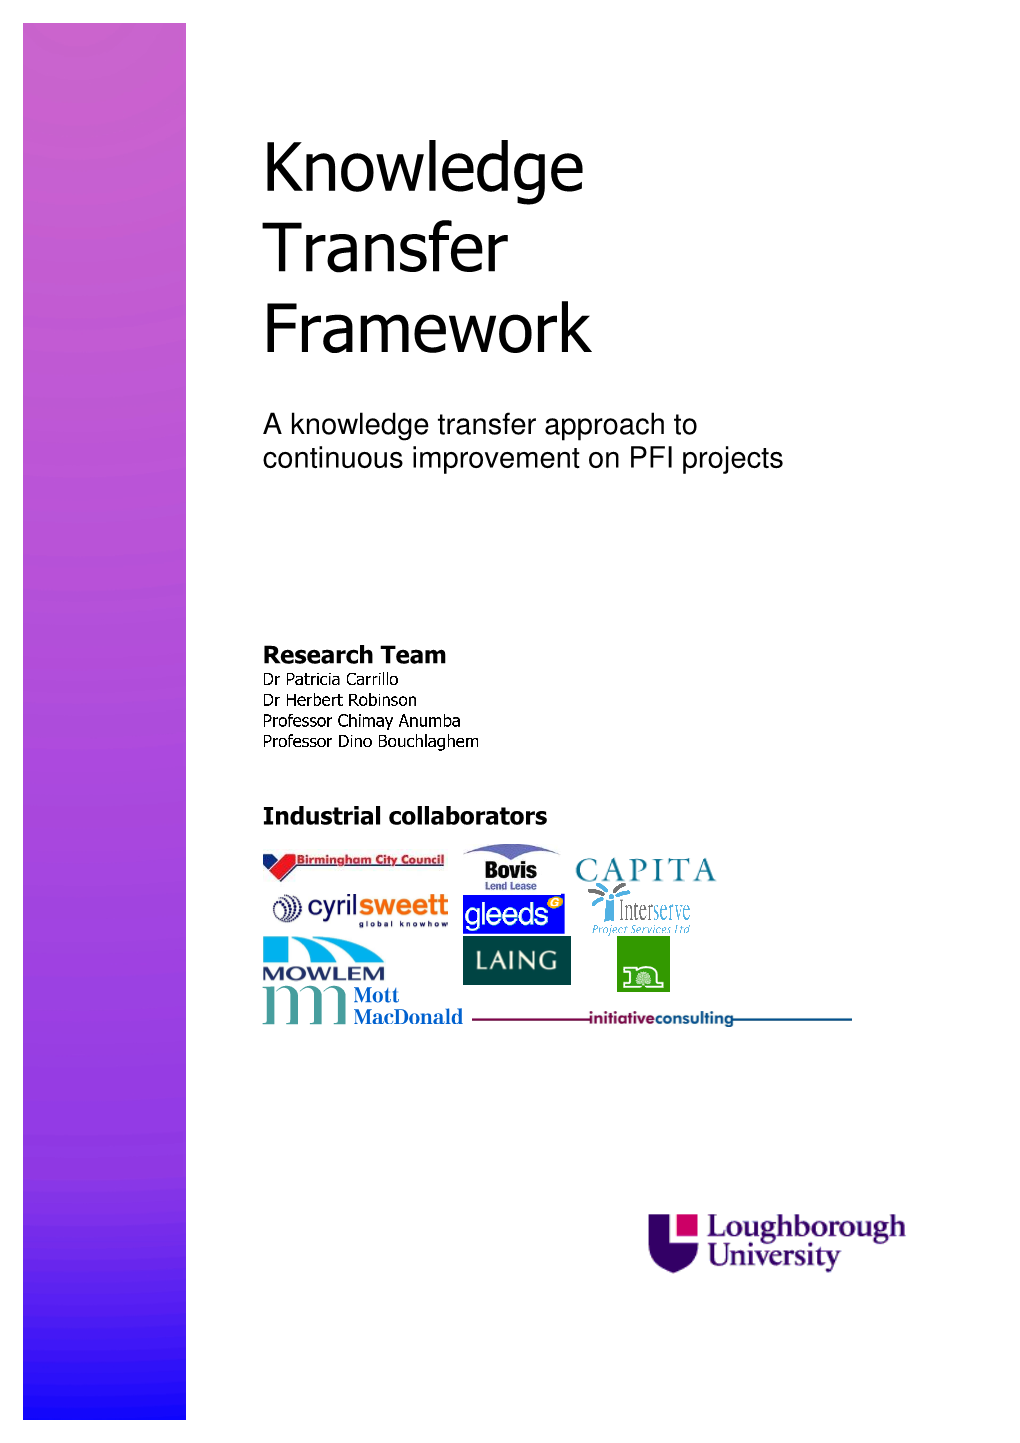 Knowledge Transfer Framework